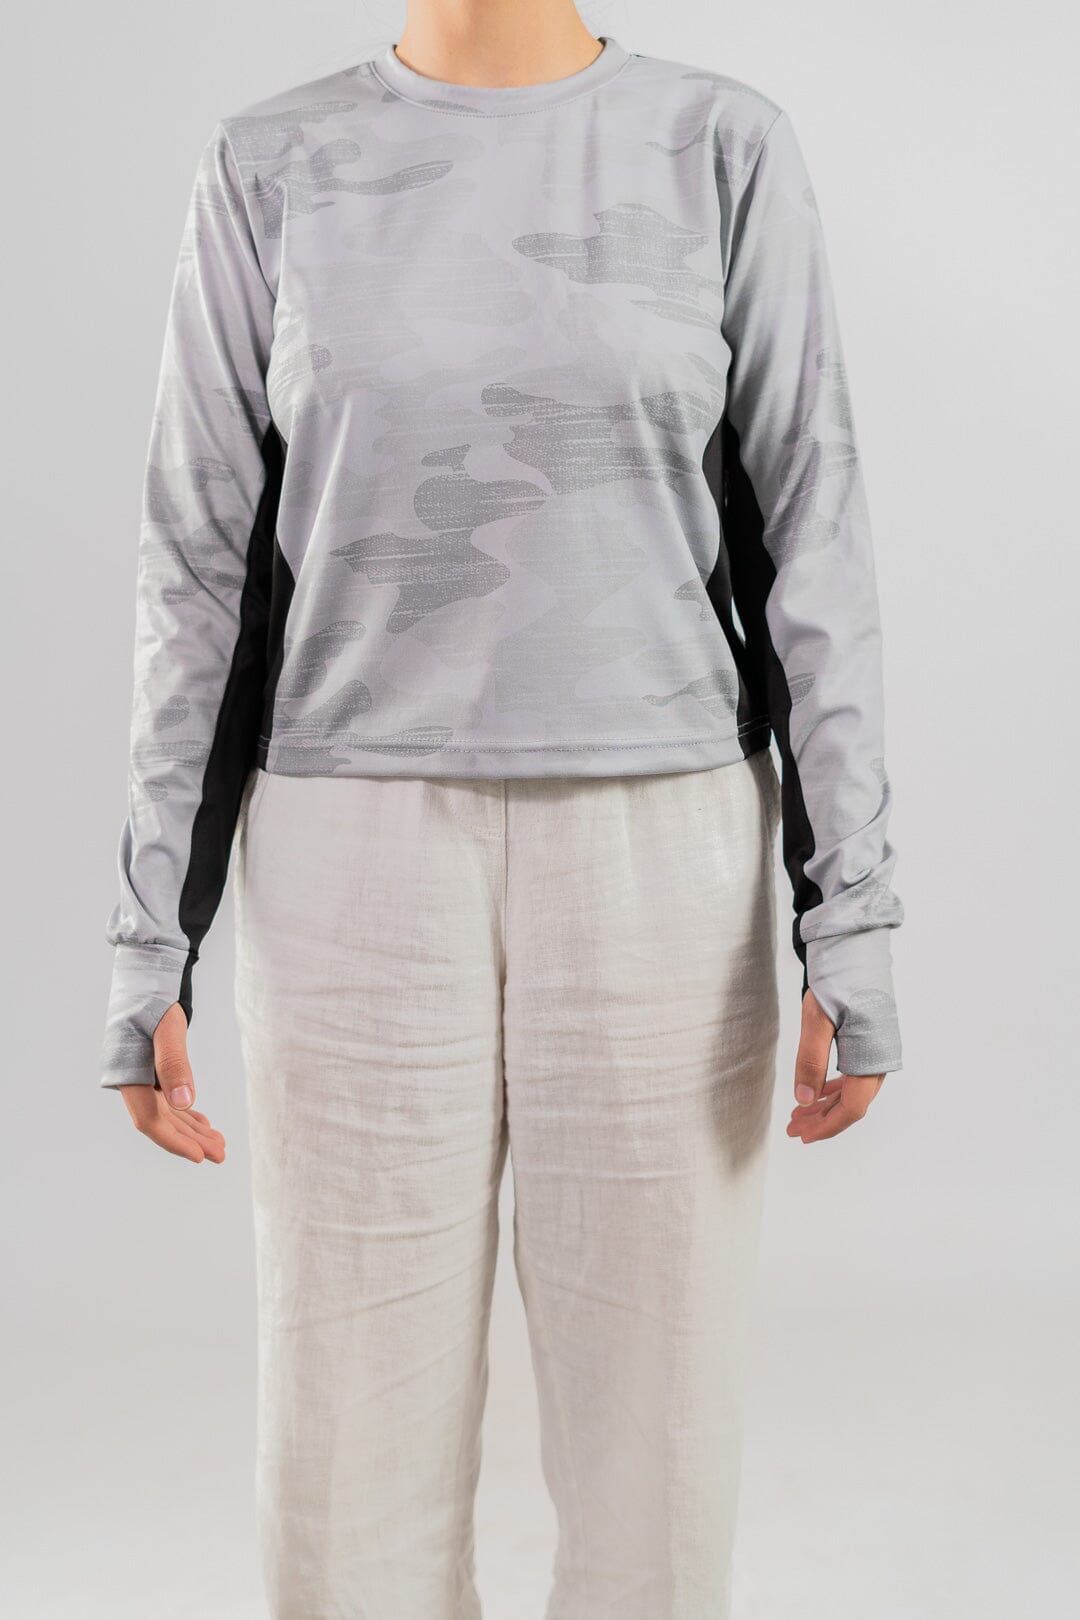 Polo Athletica Women's Contrast Panel Long Sleeve Activewear Crop Tee Shirt Women's Tee Shirt Polo Republica 